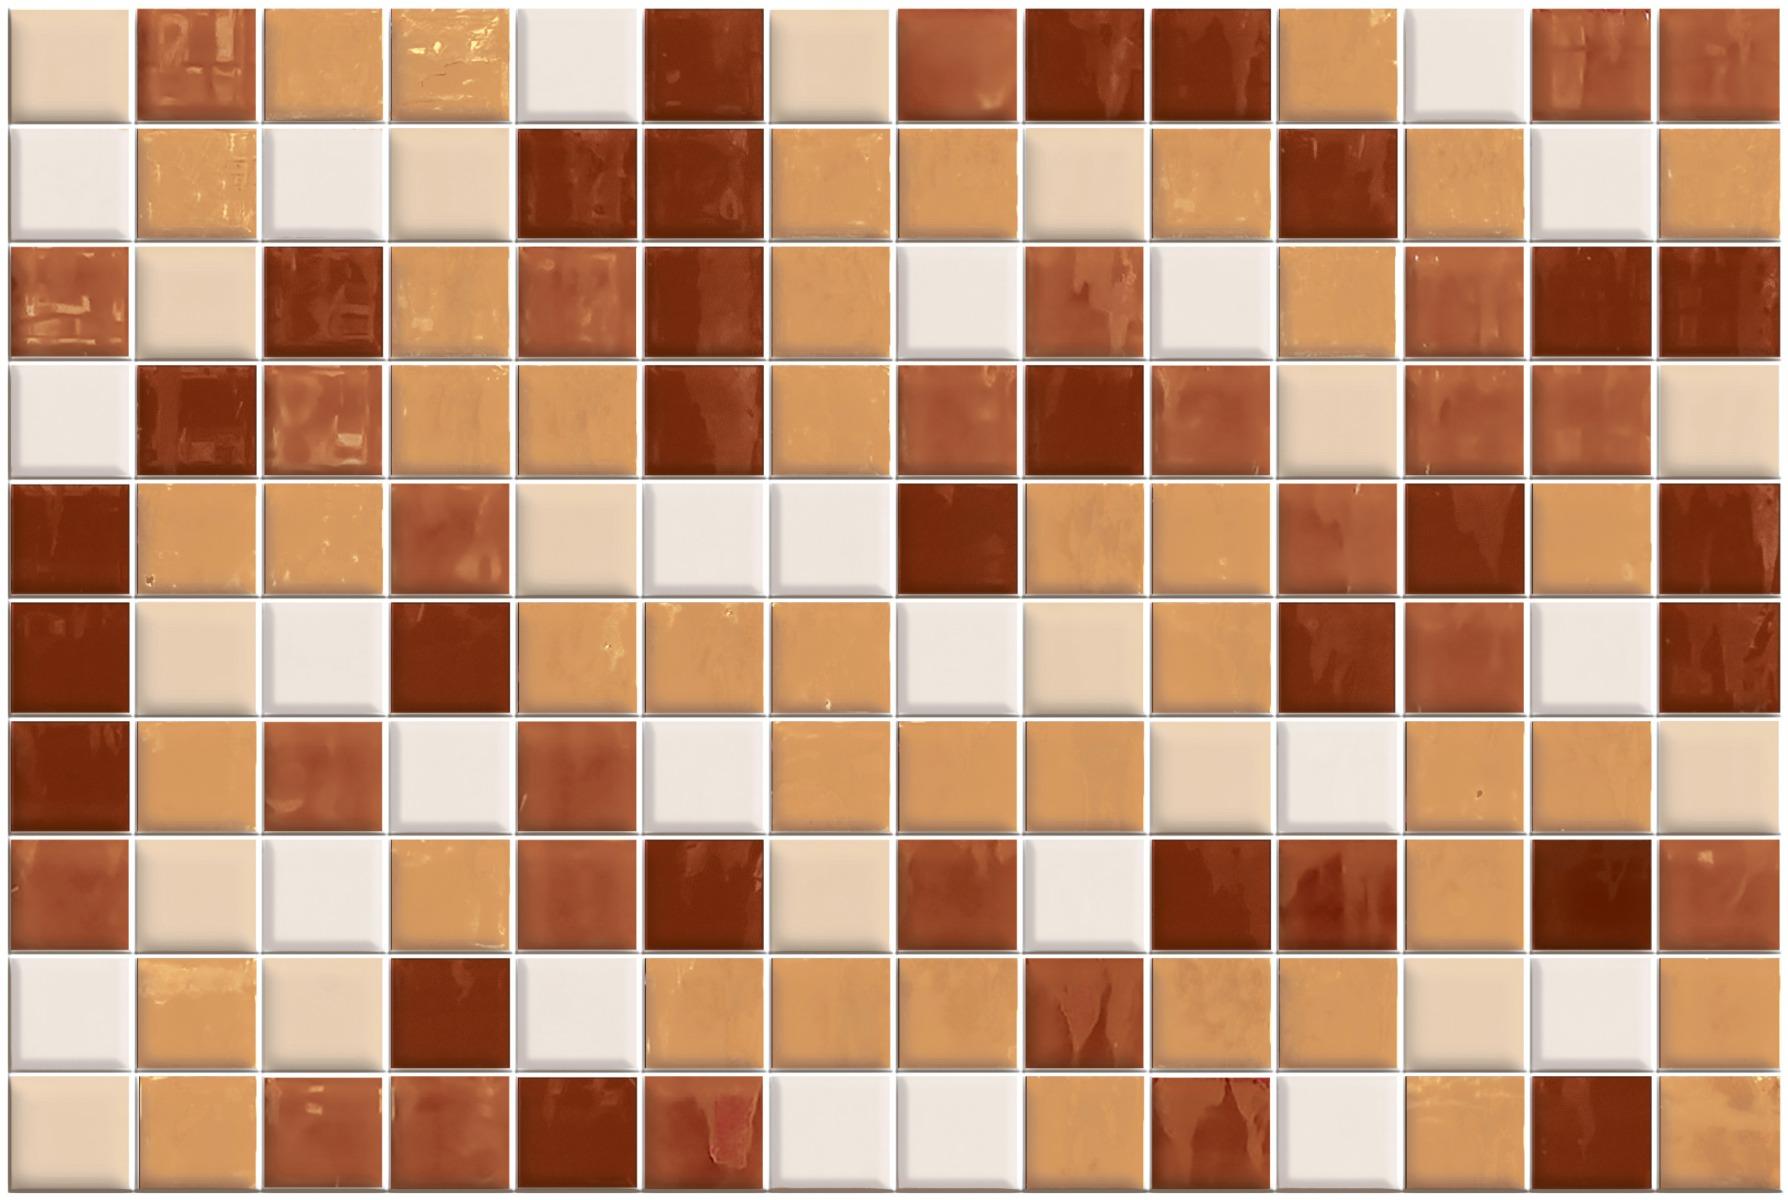 Cream Tiles for Bathroom Tiles, Kitchen Tiles, Accent Tiles, Dining Room Tiles